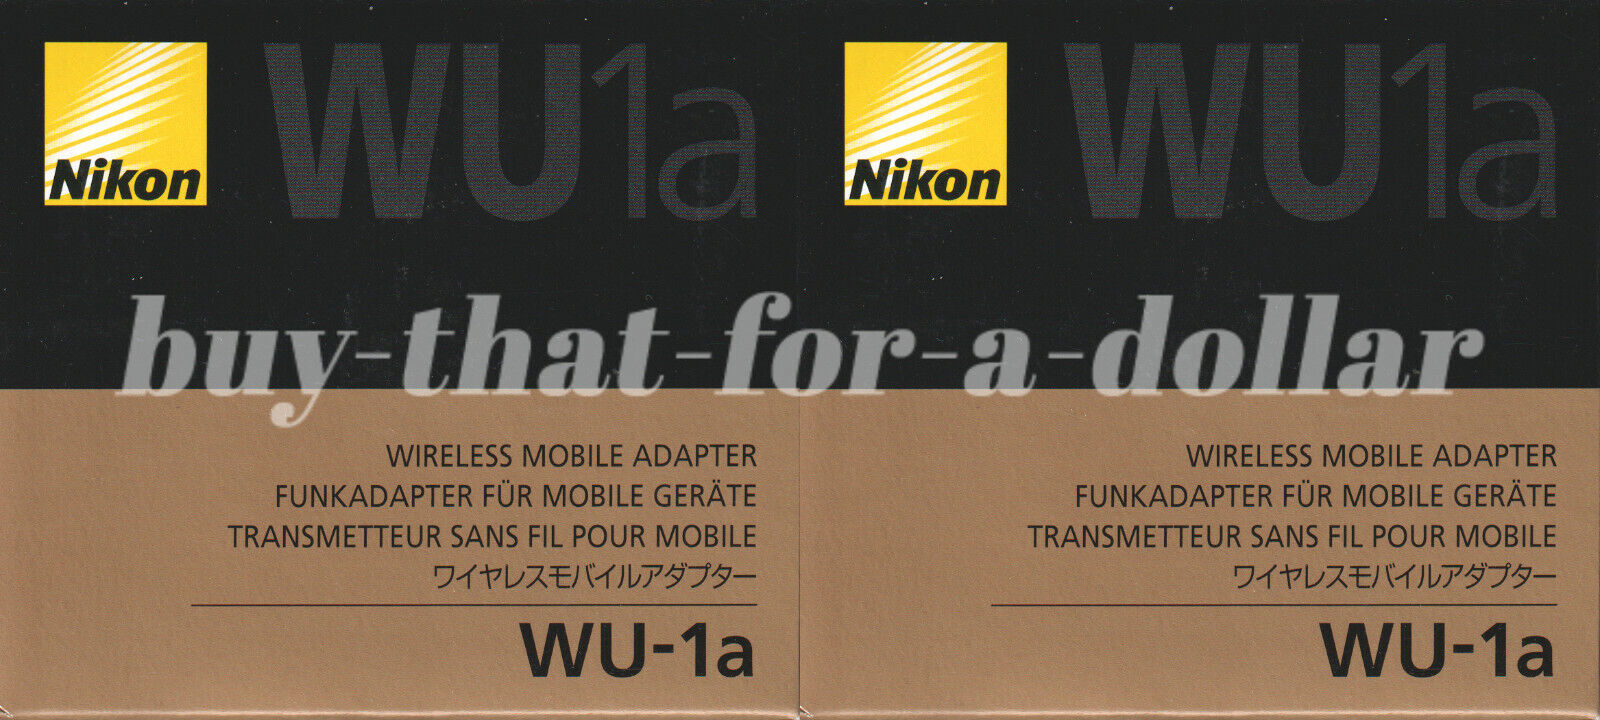 NEW*2 NIKON WU-1a Wireless Mobile Adapter-D3200 D3300 D5200 D5300